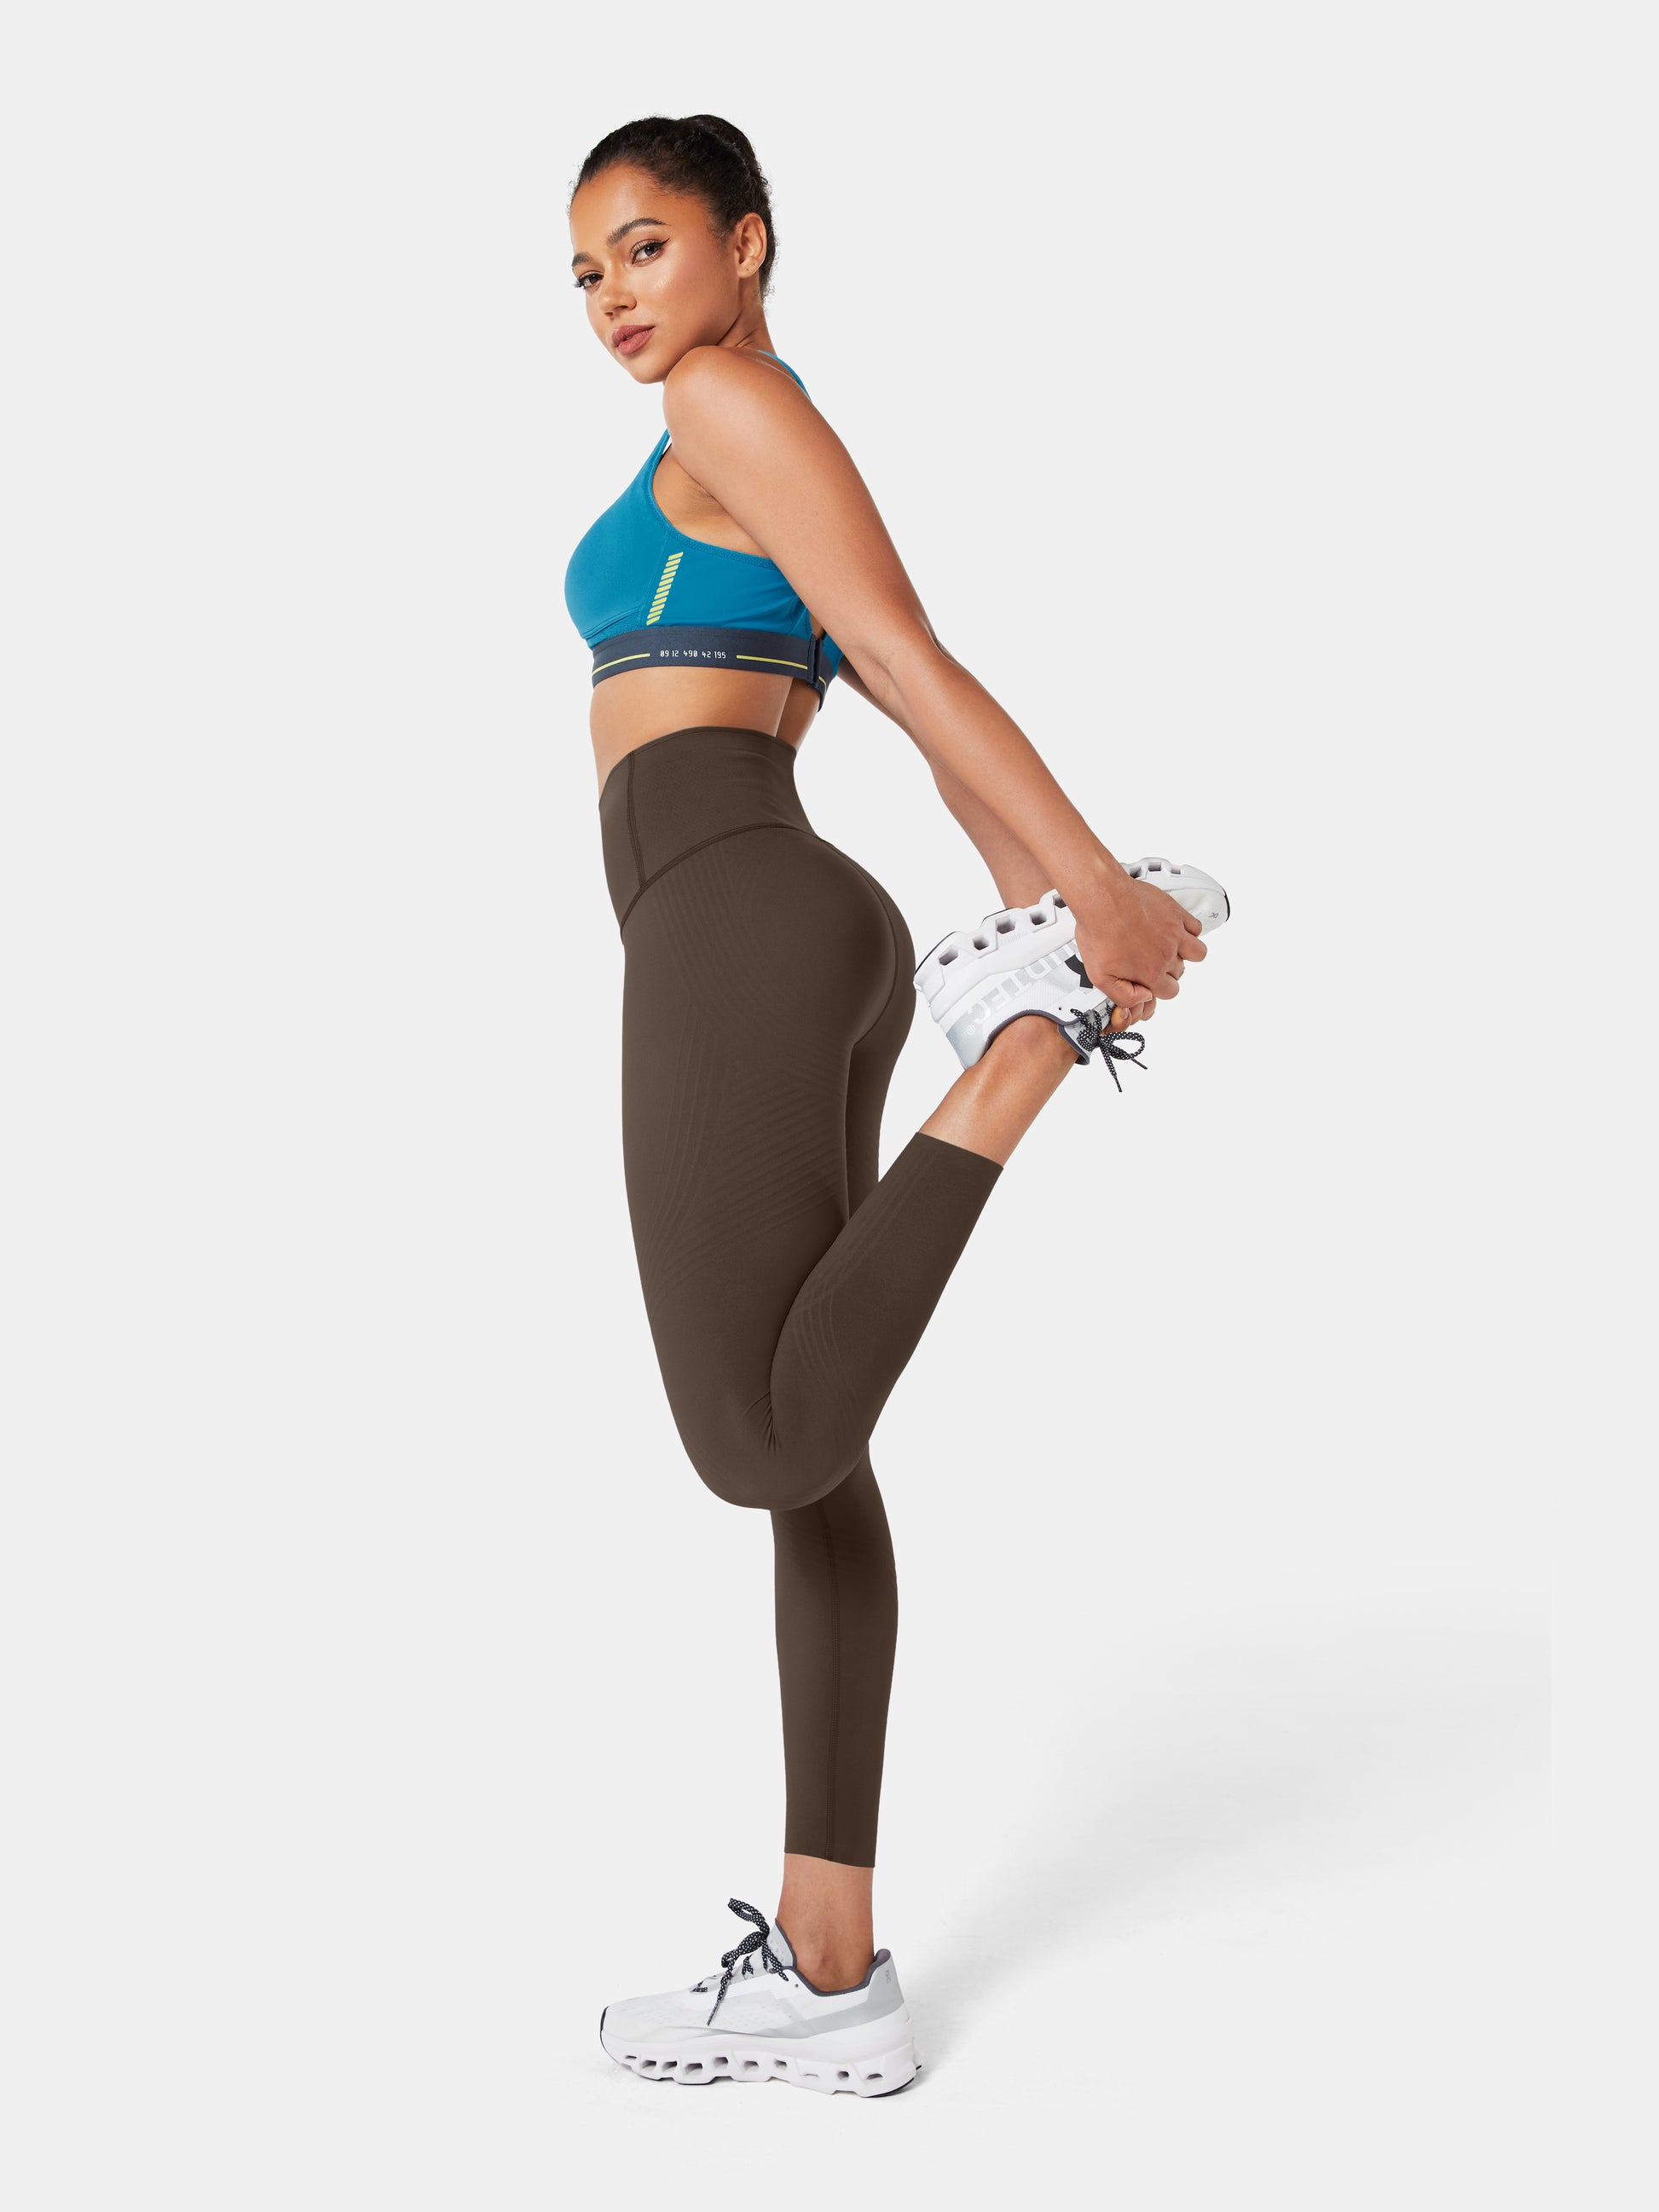 Grays Anatomy Muscle Leggings Gray Charcoal Yoga Pants Legs Womens Custom Leggings  Small Extra Small S XS 